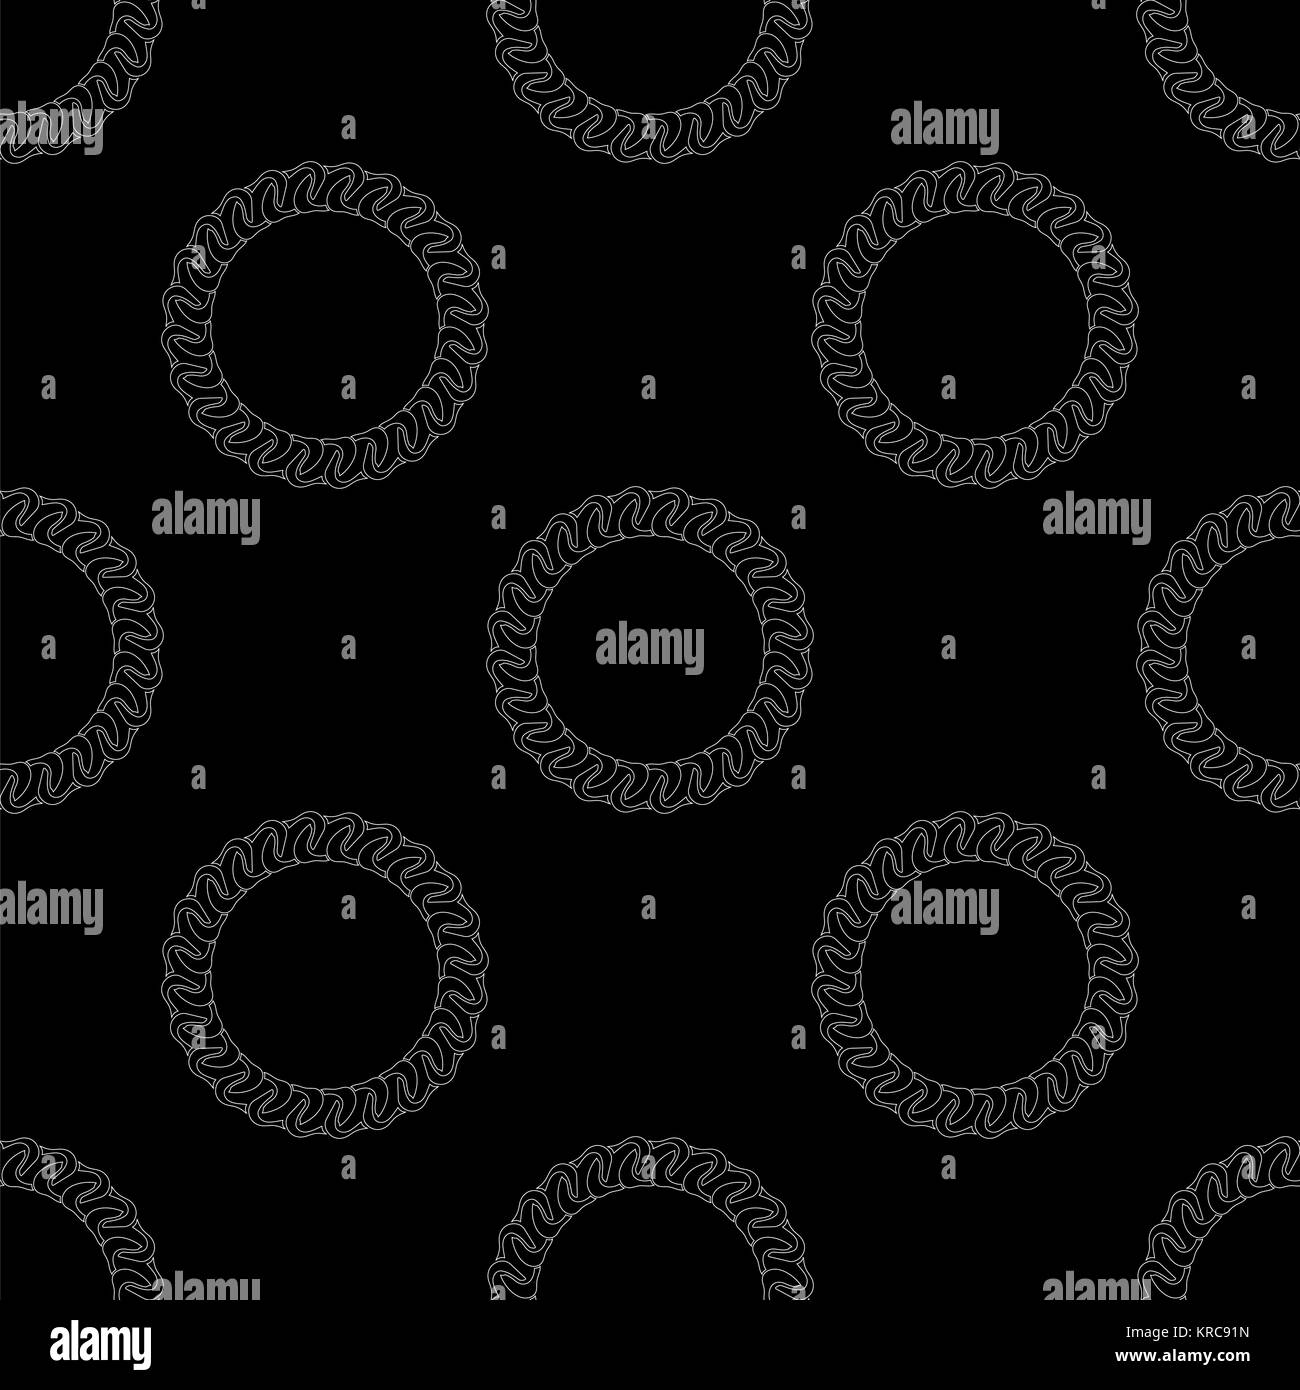 Seamless Black White Chain Pattern Stock Photo